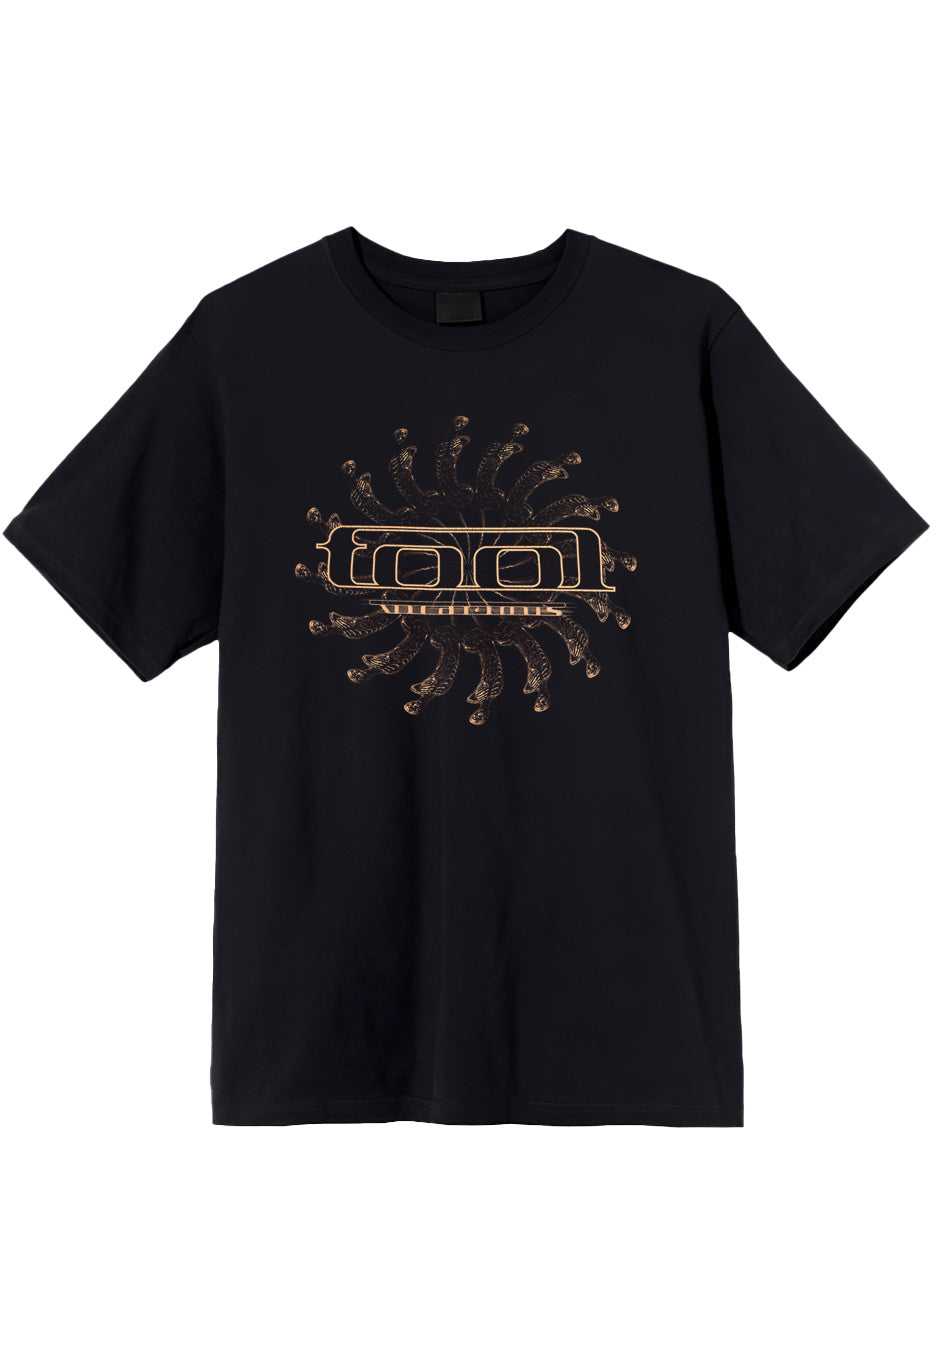 Tool - Spectre Spiral Vicarious - T-Shirt